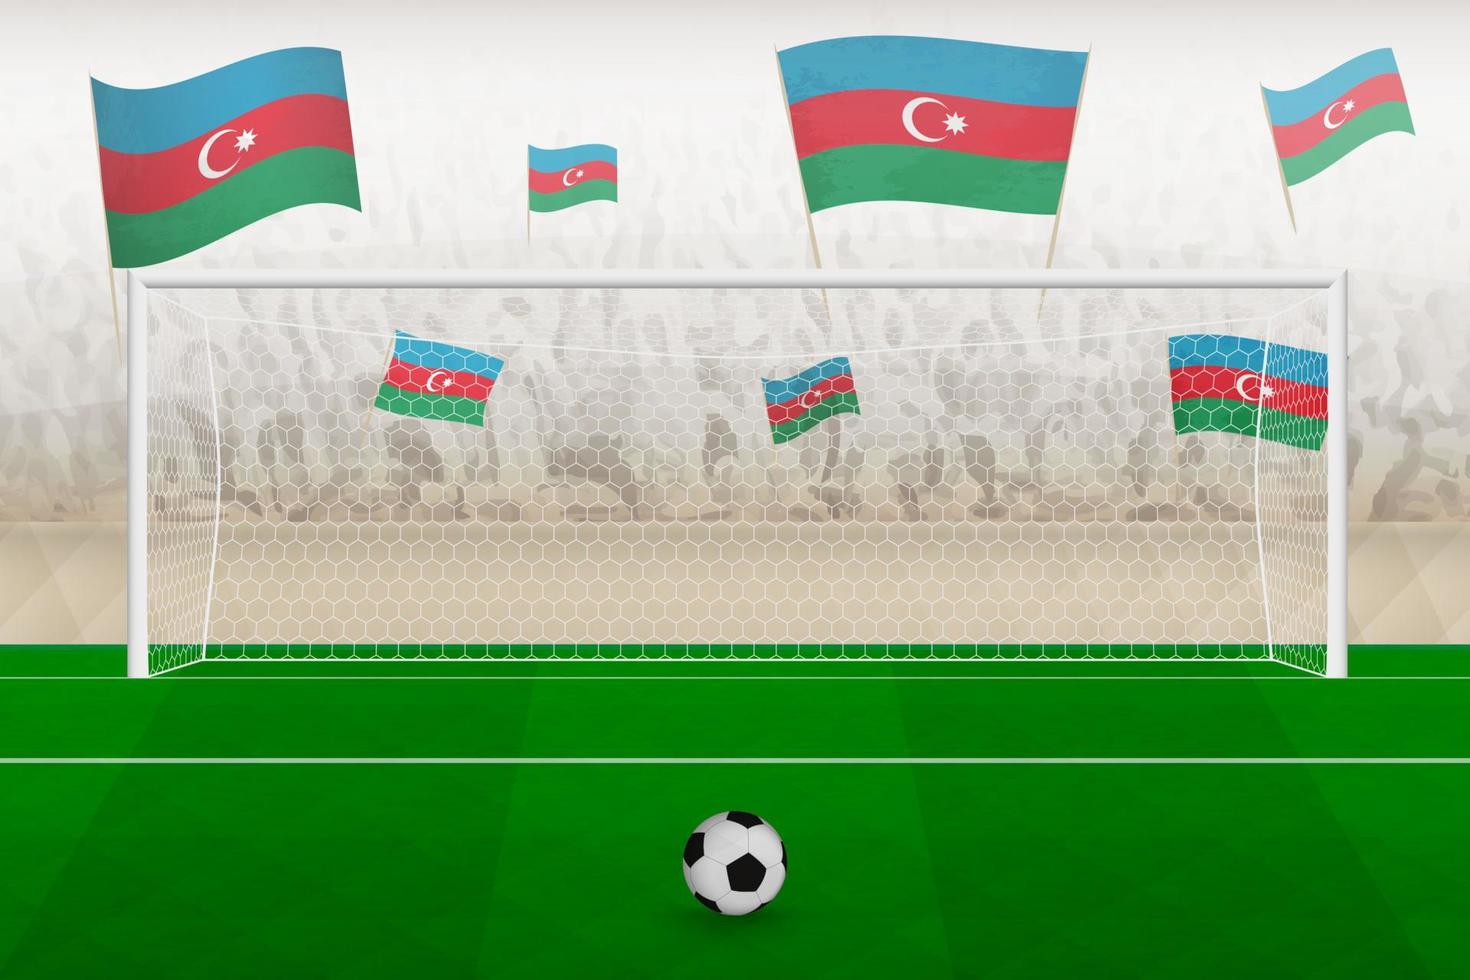 Azerbaijan football team fans with flags of Azerbaijan cheering on stadium, penalty kick concept in a soccer match. vector